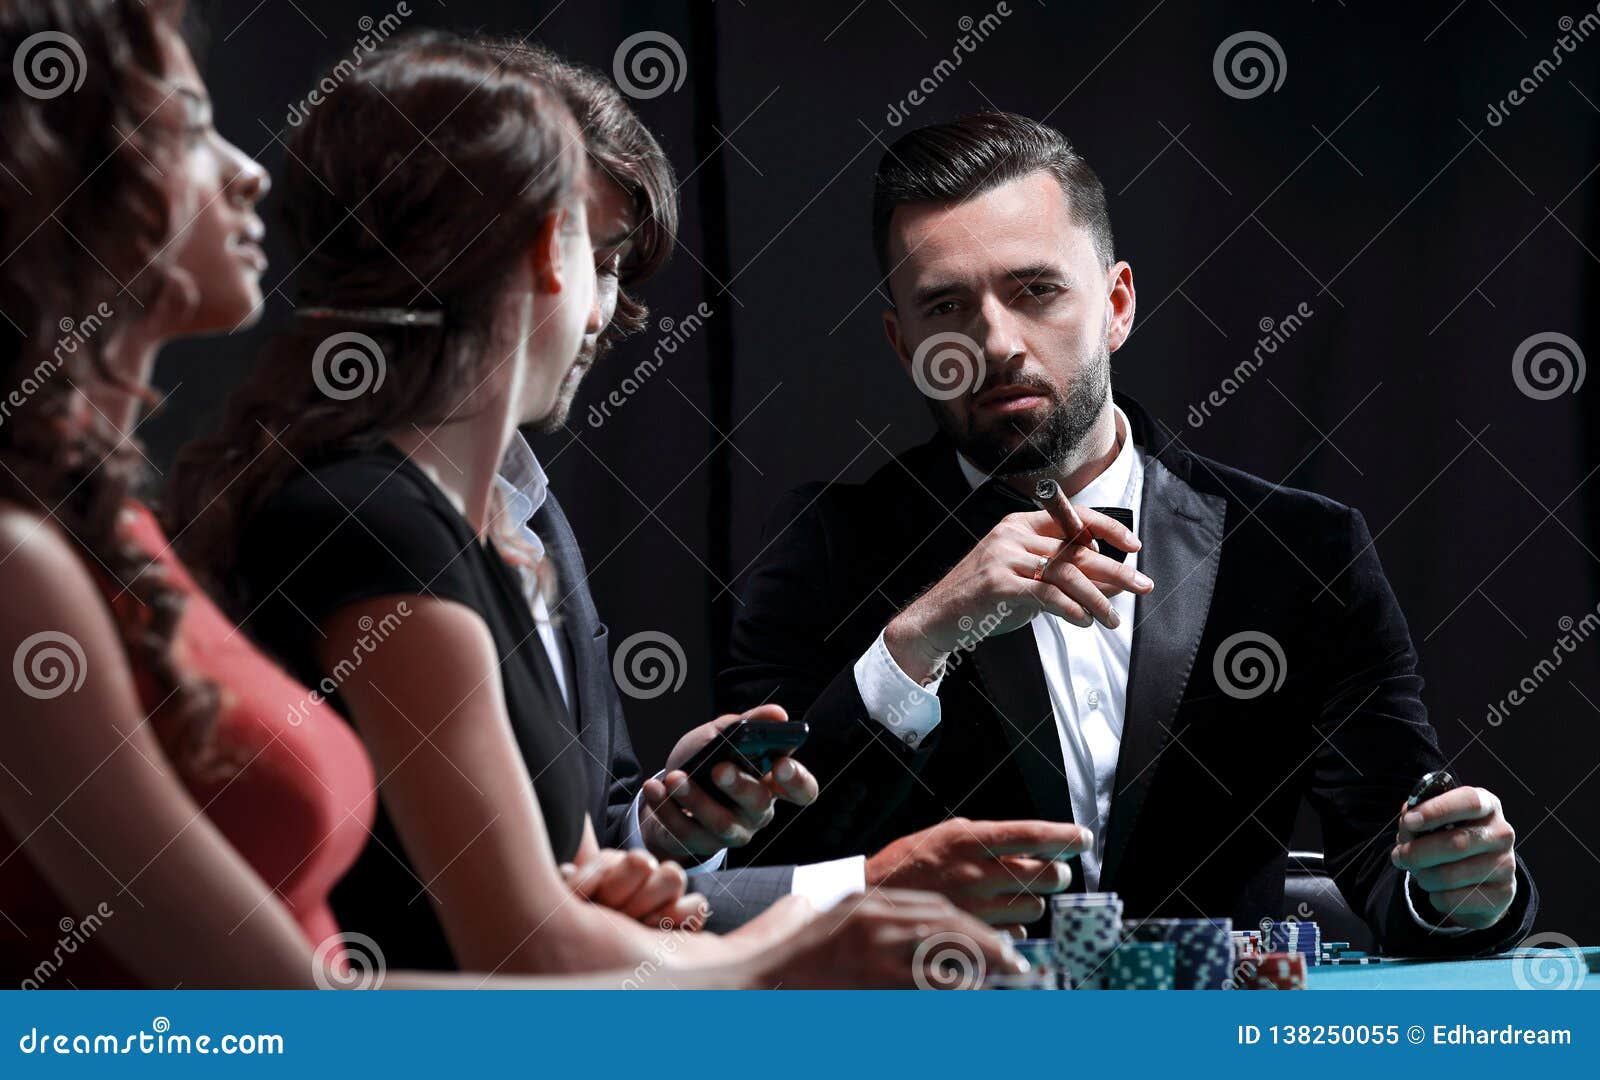 People enjoying a night out gambling at the casino